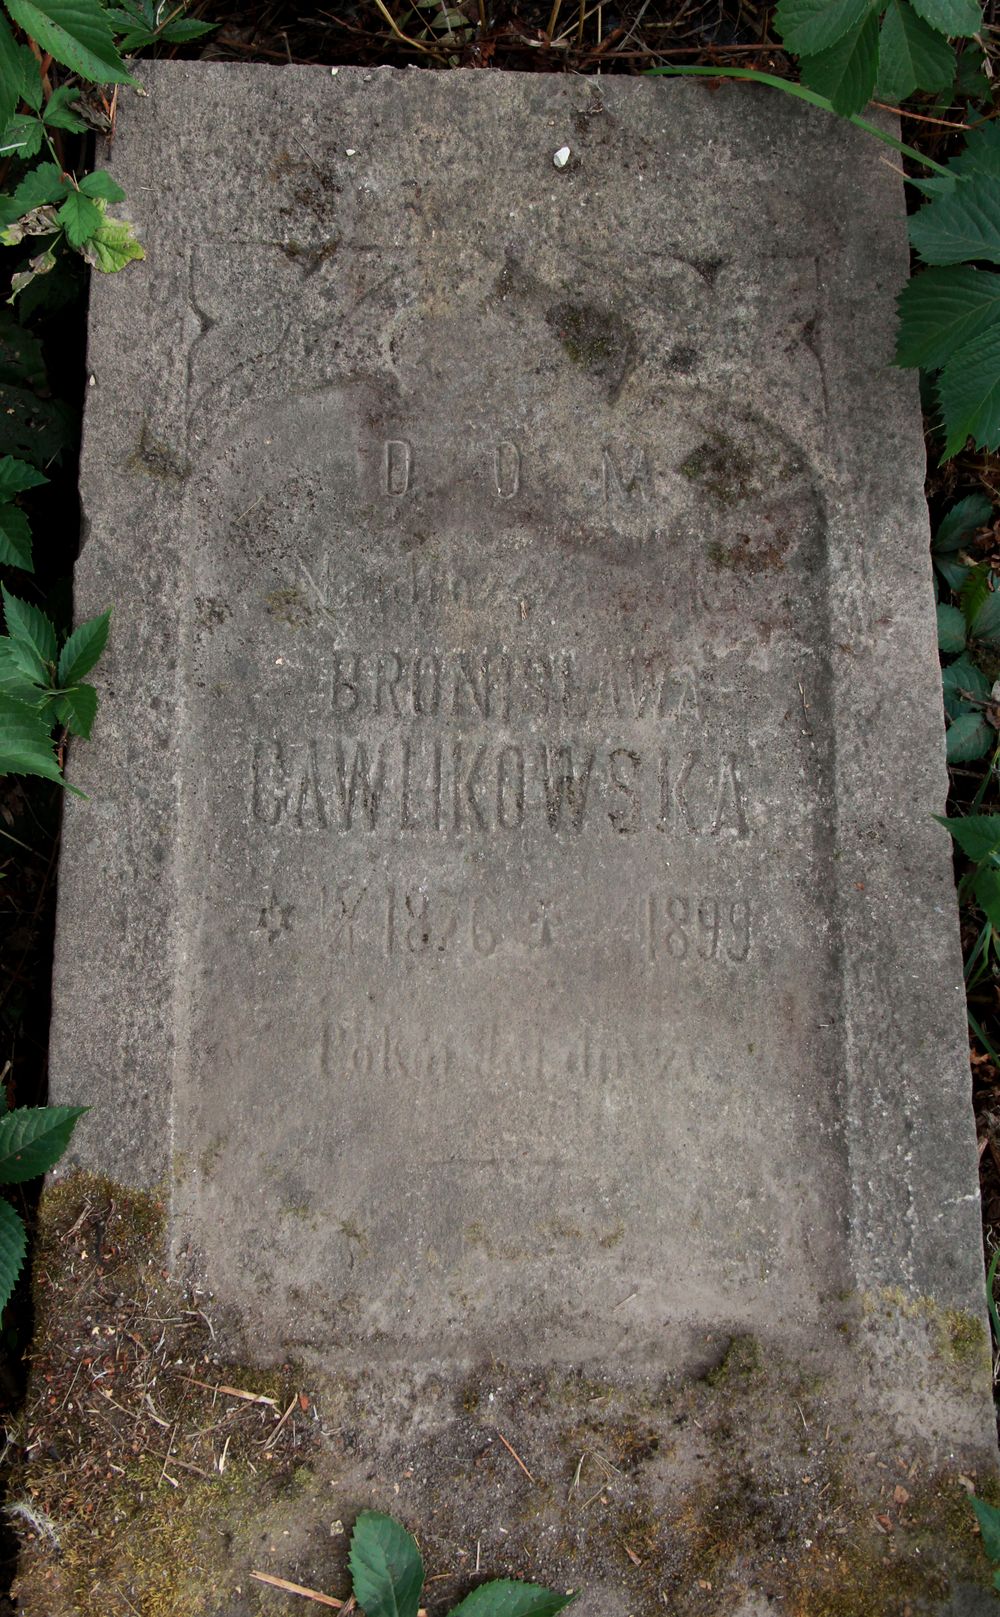 Tombstone of Bronislawa Gawlikowska, Ternopil cemetery, as of 2016